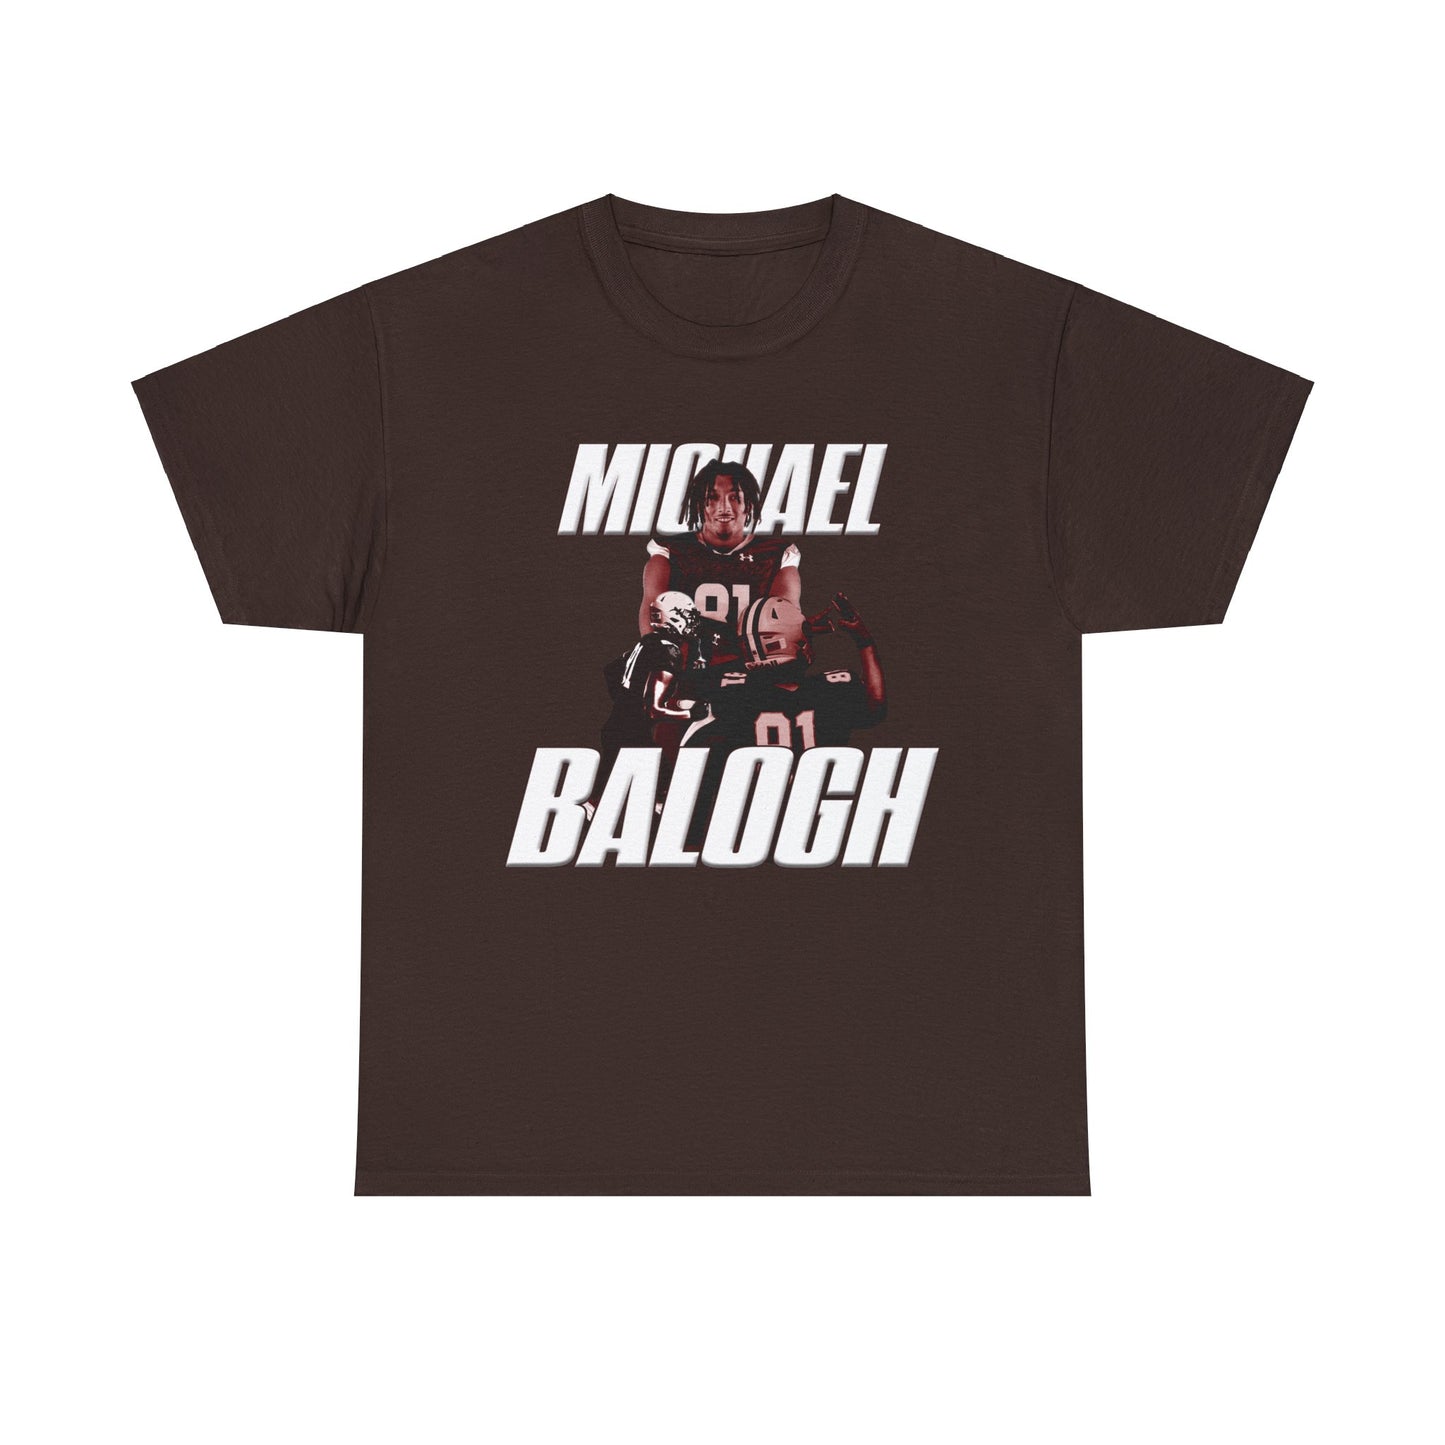 Michael Balogh: Essential Tee